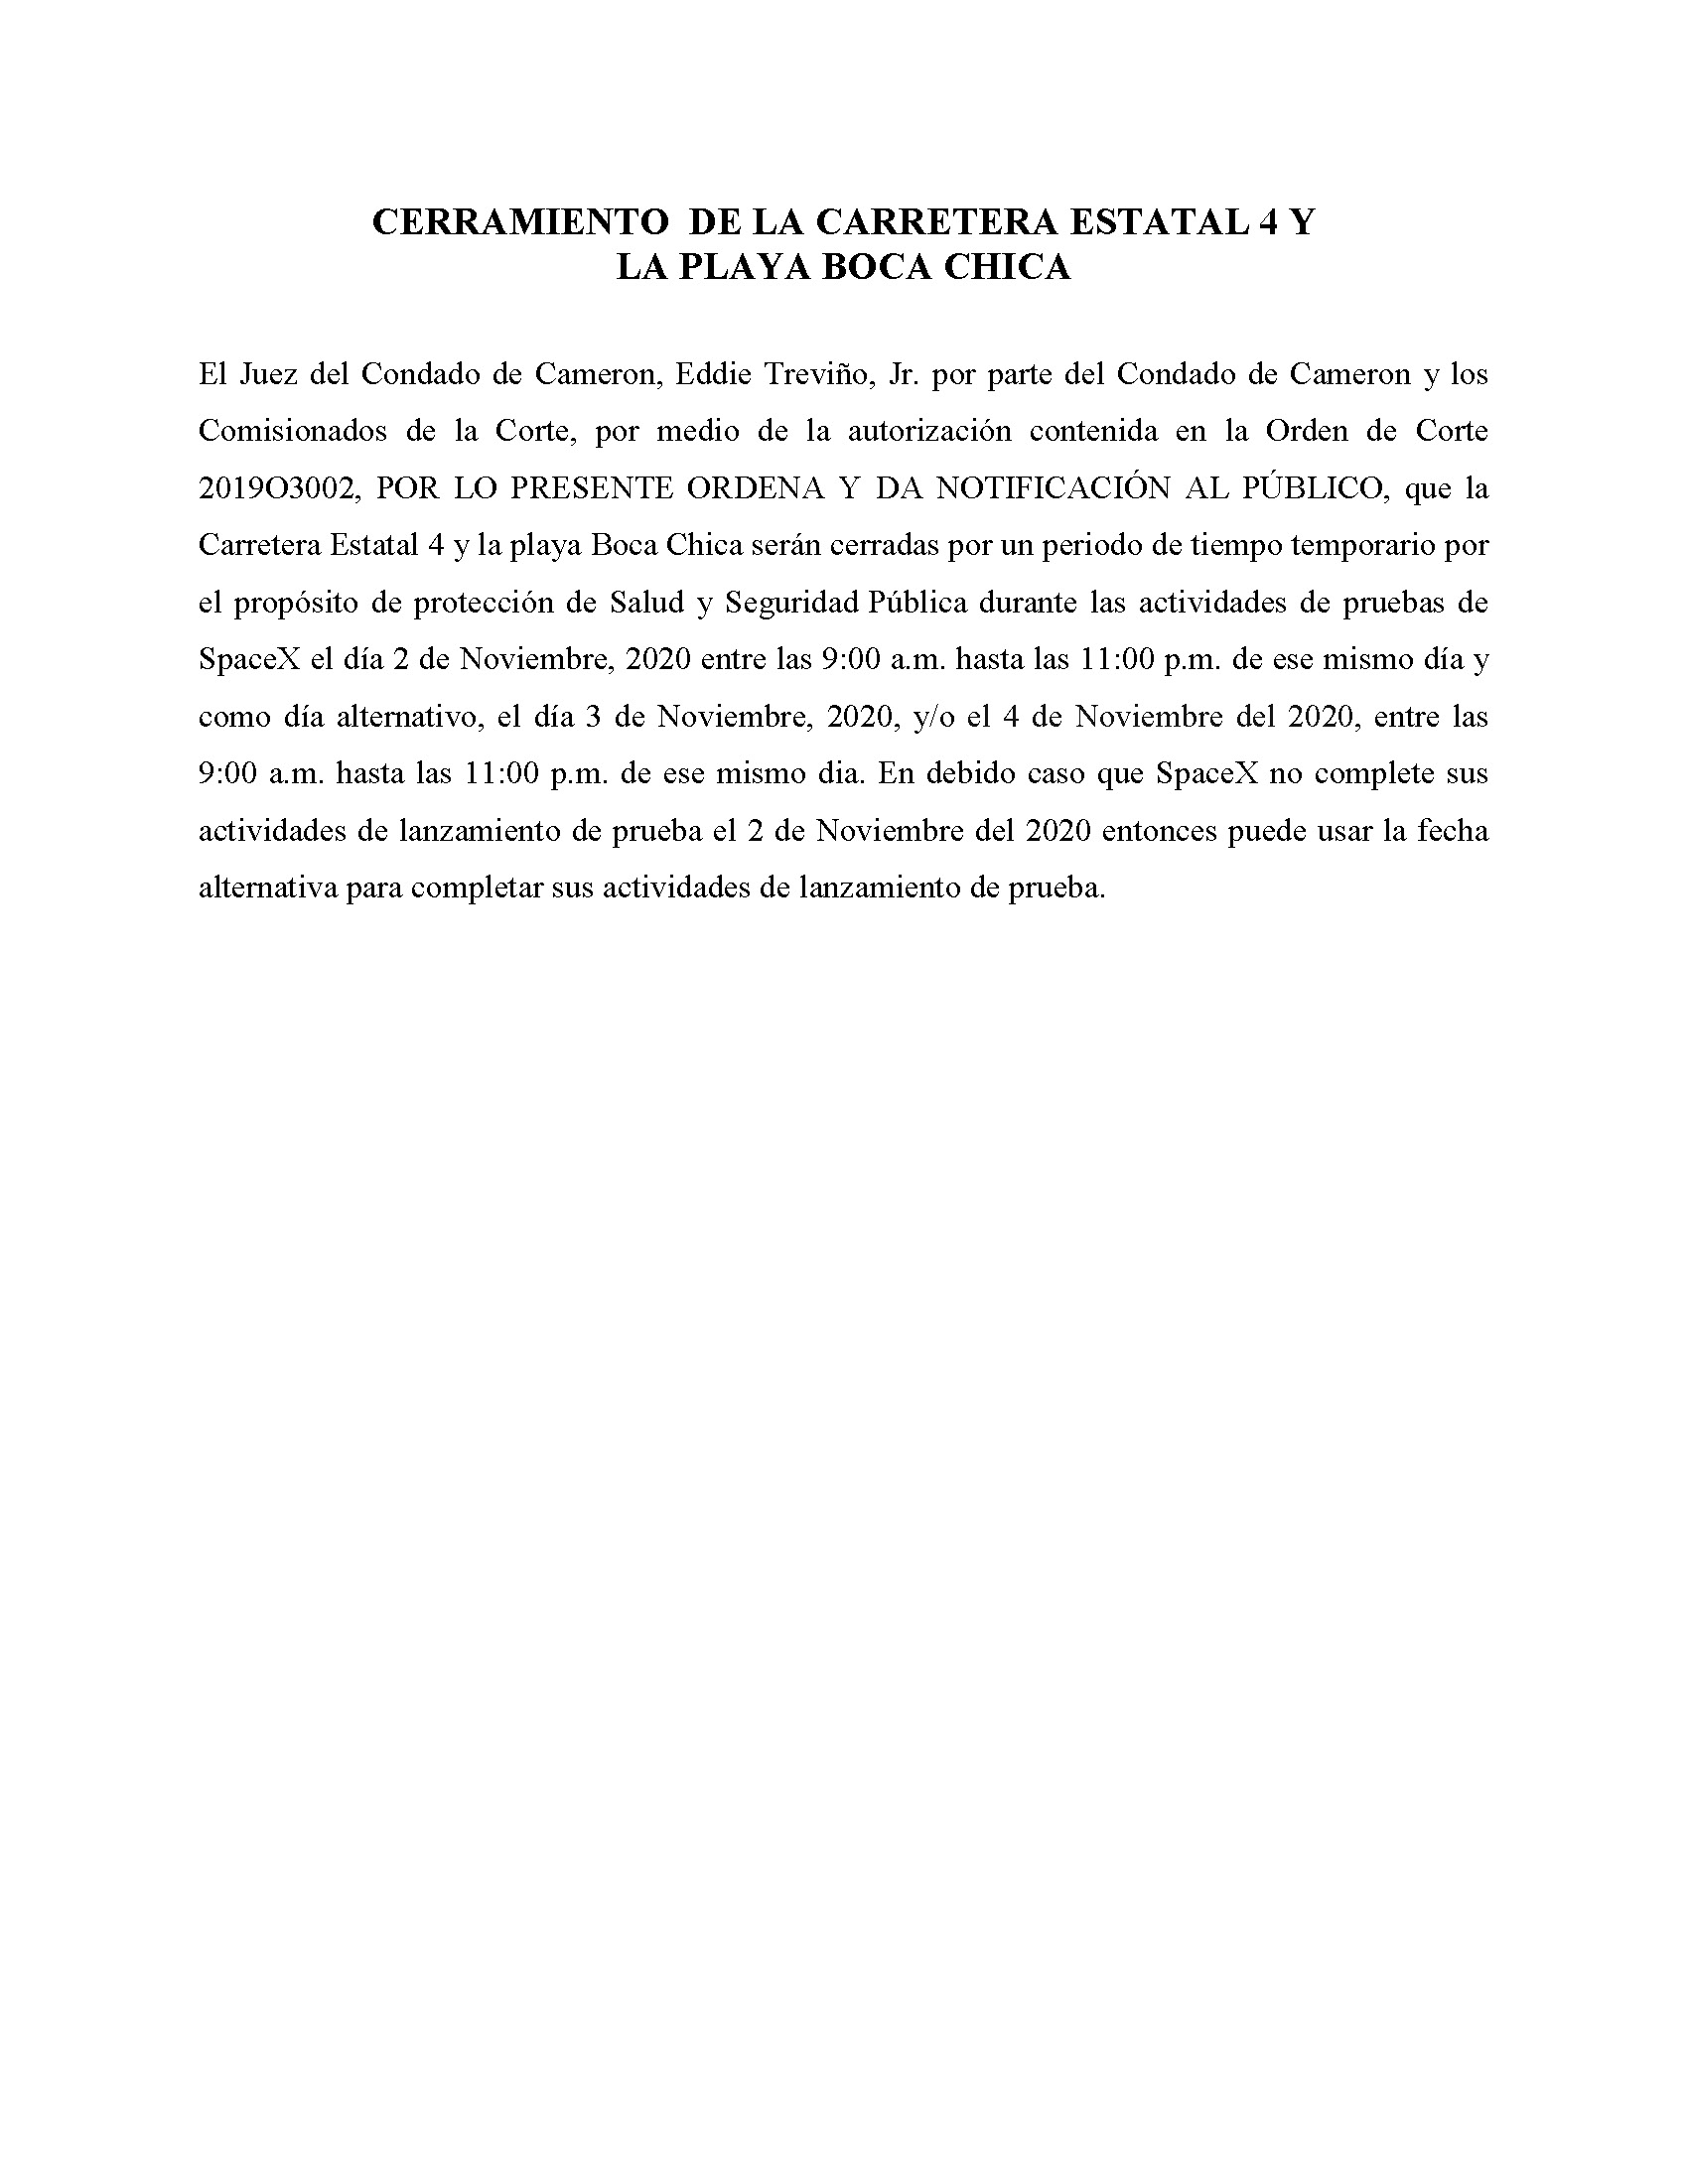 ORDER.CLOSURE OF HIGHWAY 4 Y LA PLAYA BOCA CHICA.SPANISH.11.02.20